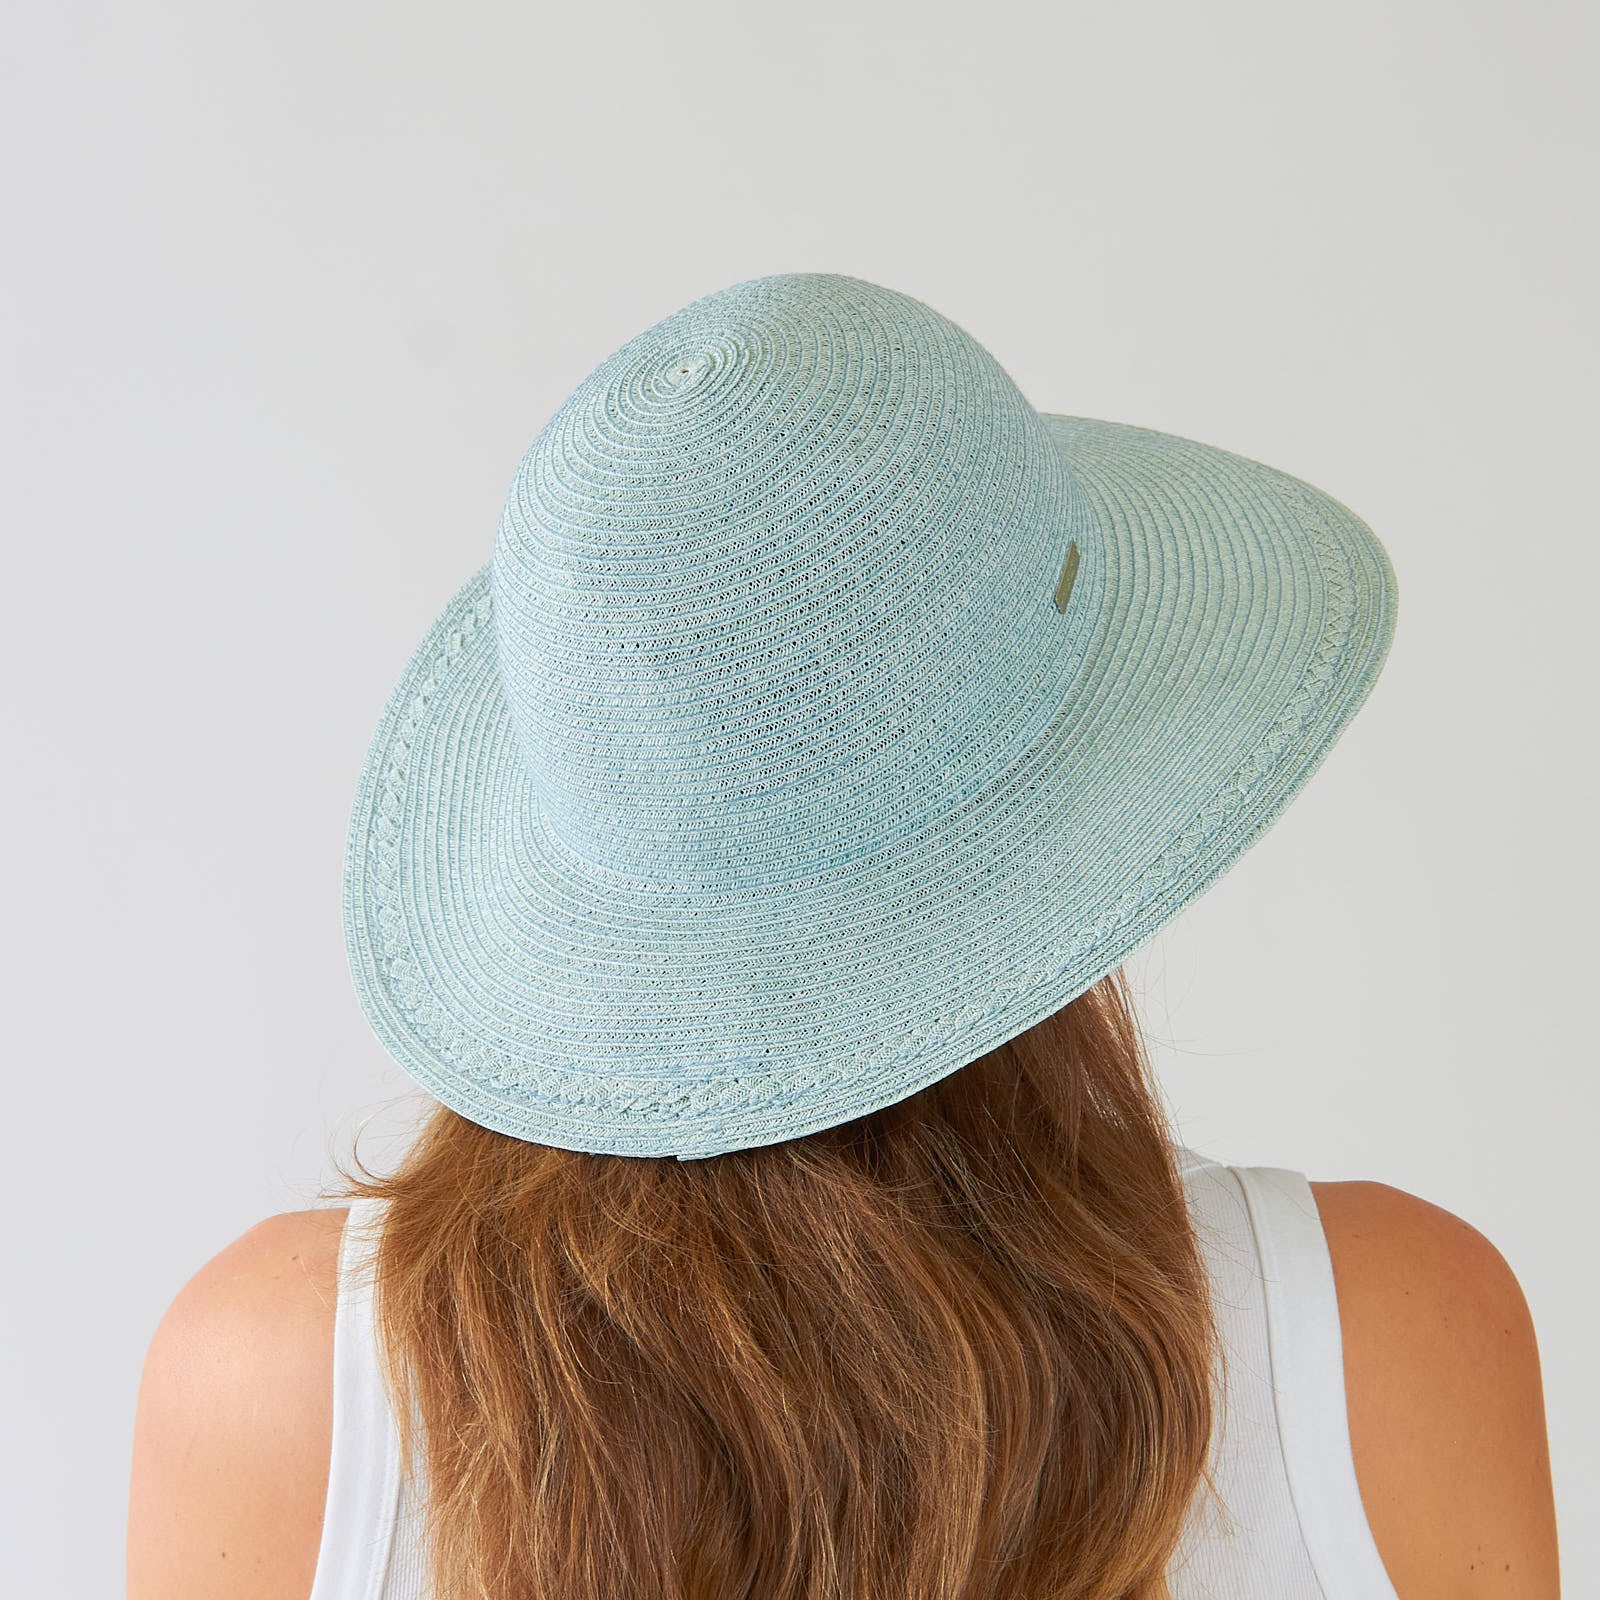 Aqua Braid Floppy Sun Hat